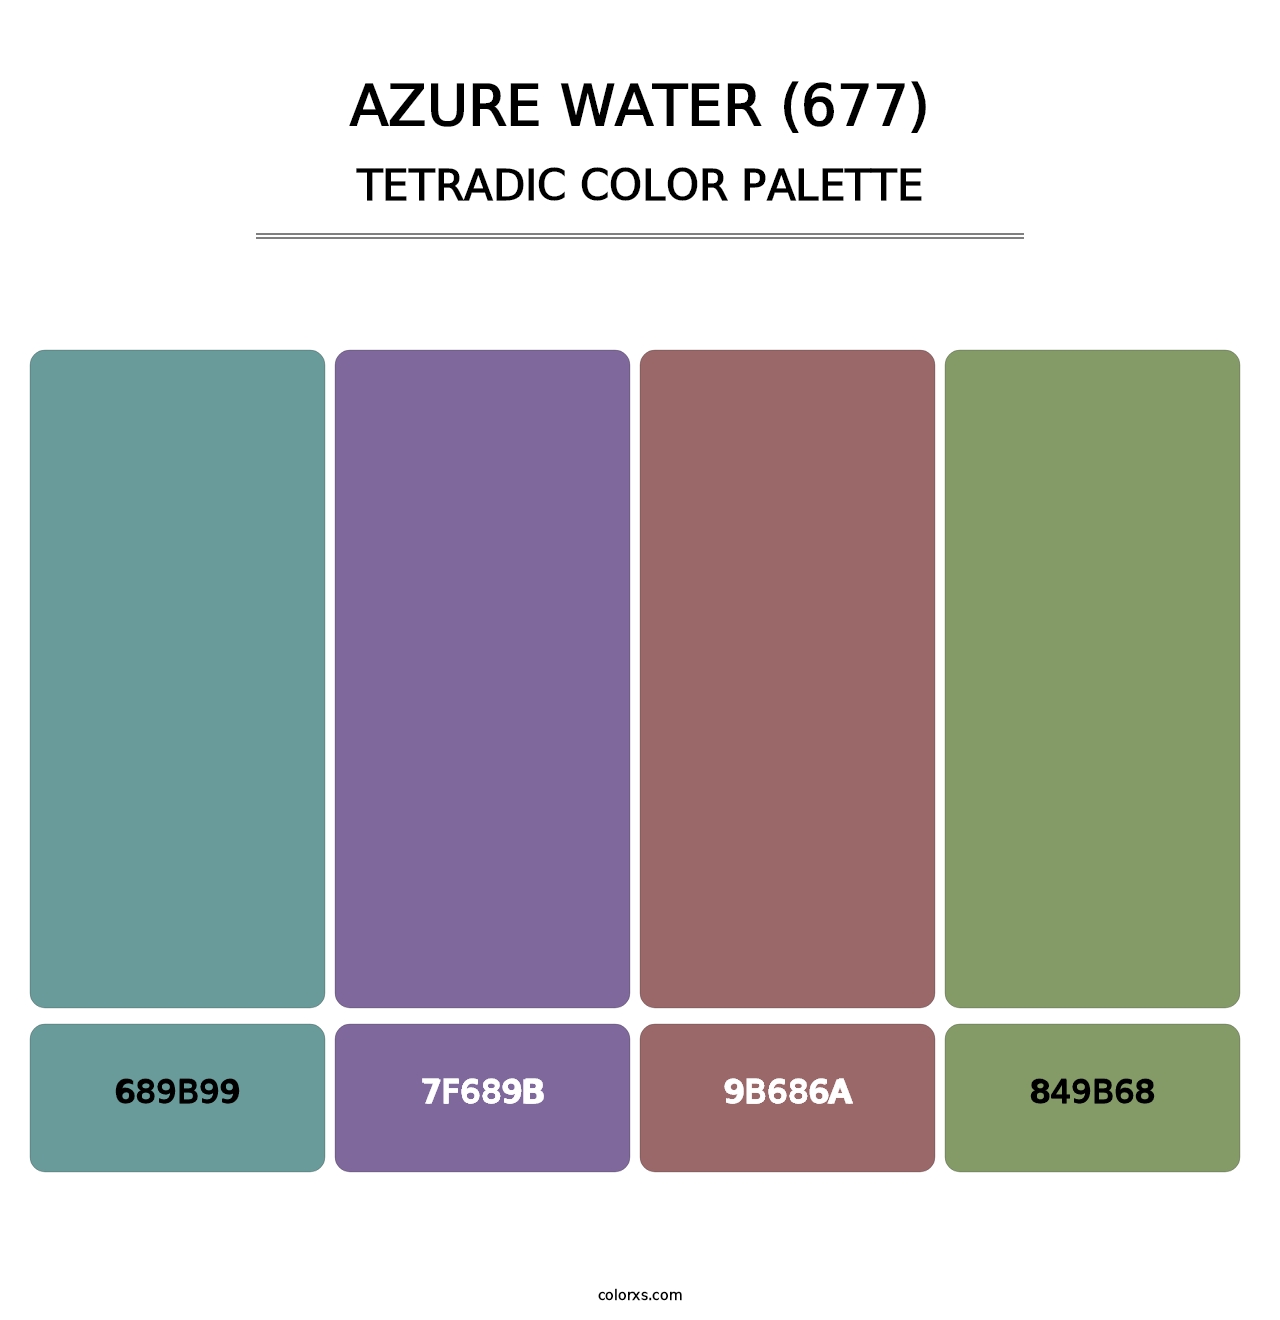 Azure Water (677) - Tetradic Color Palette